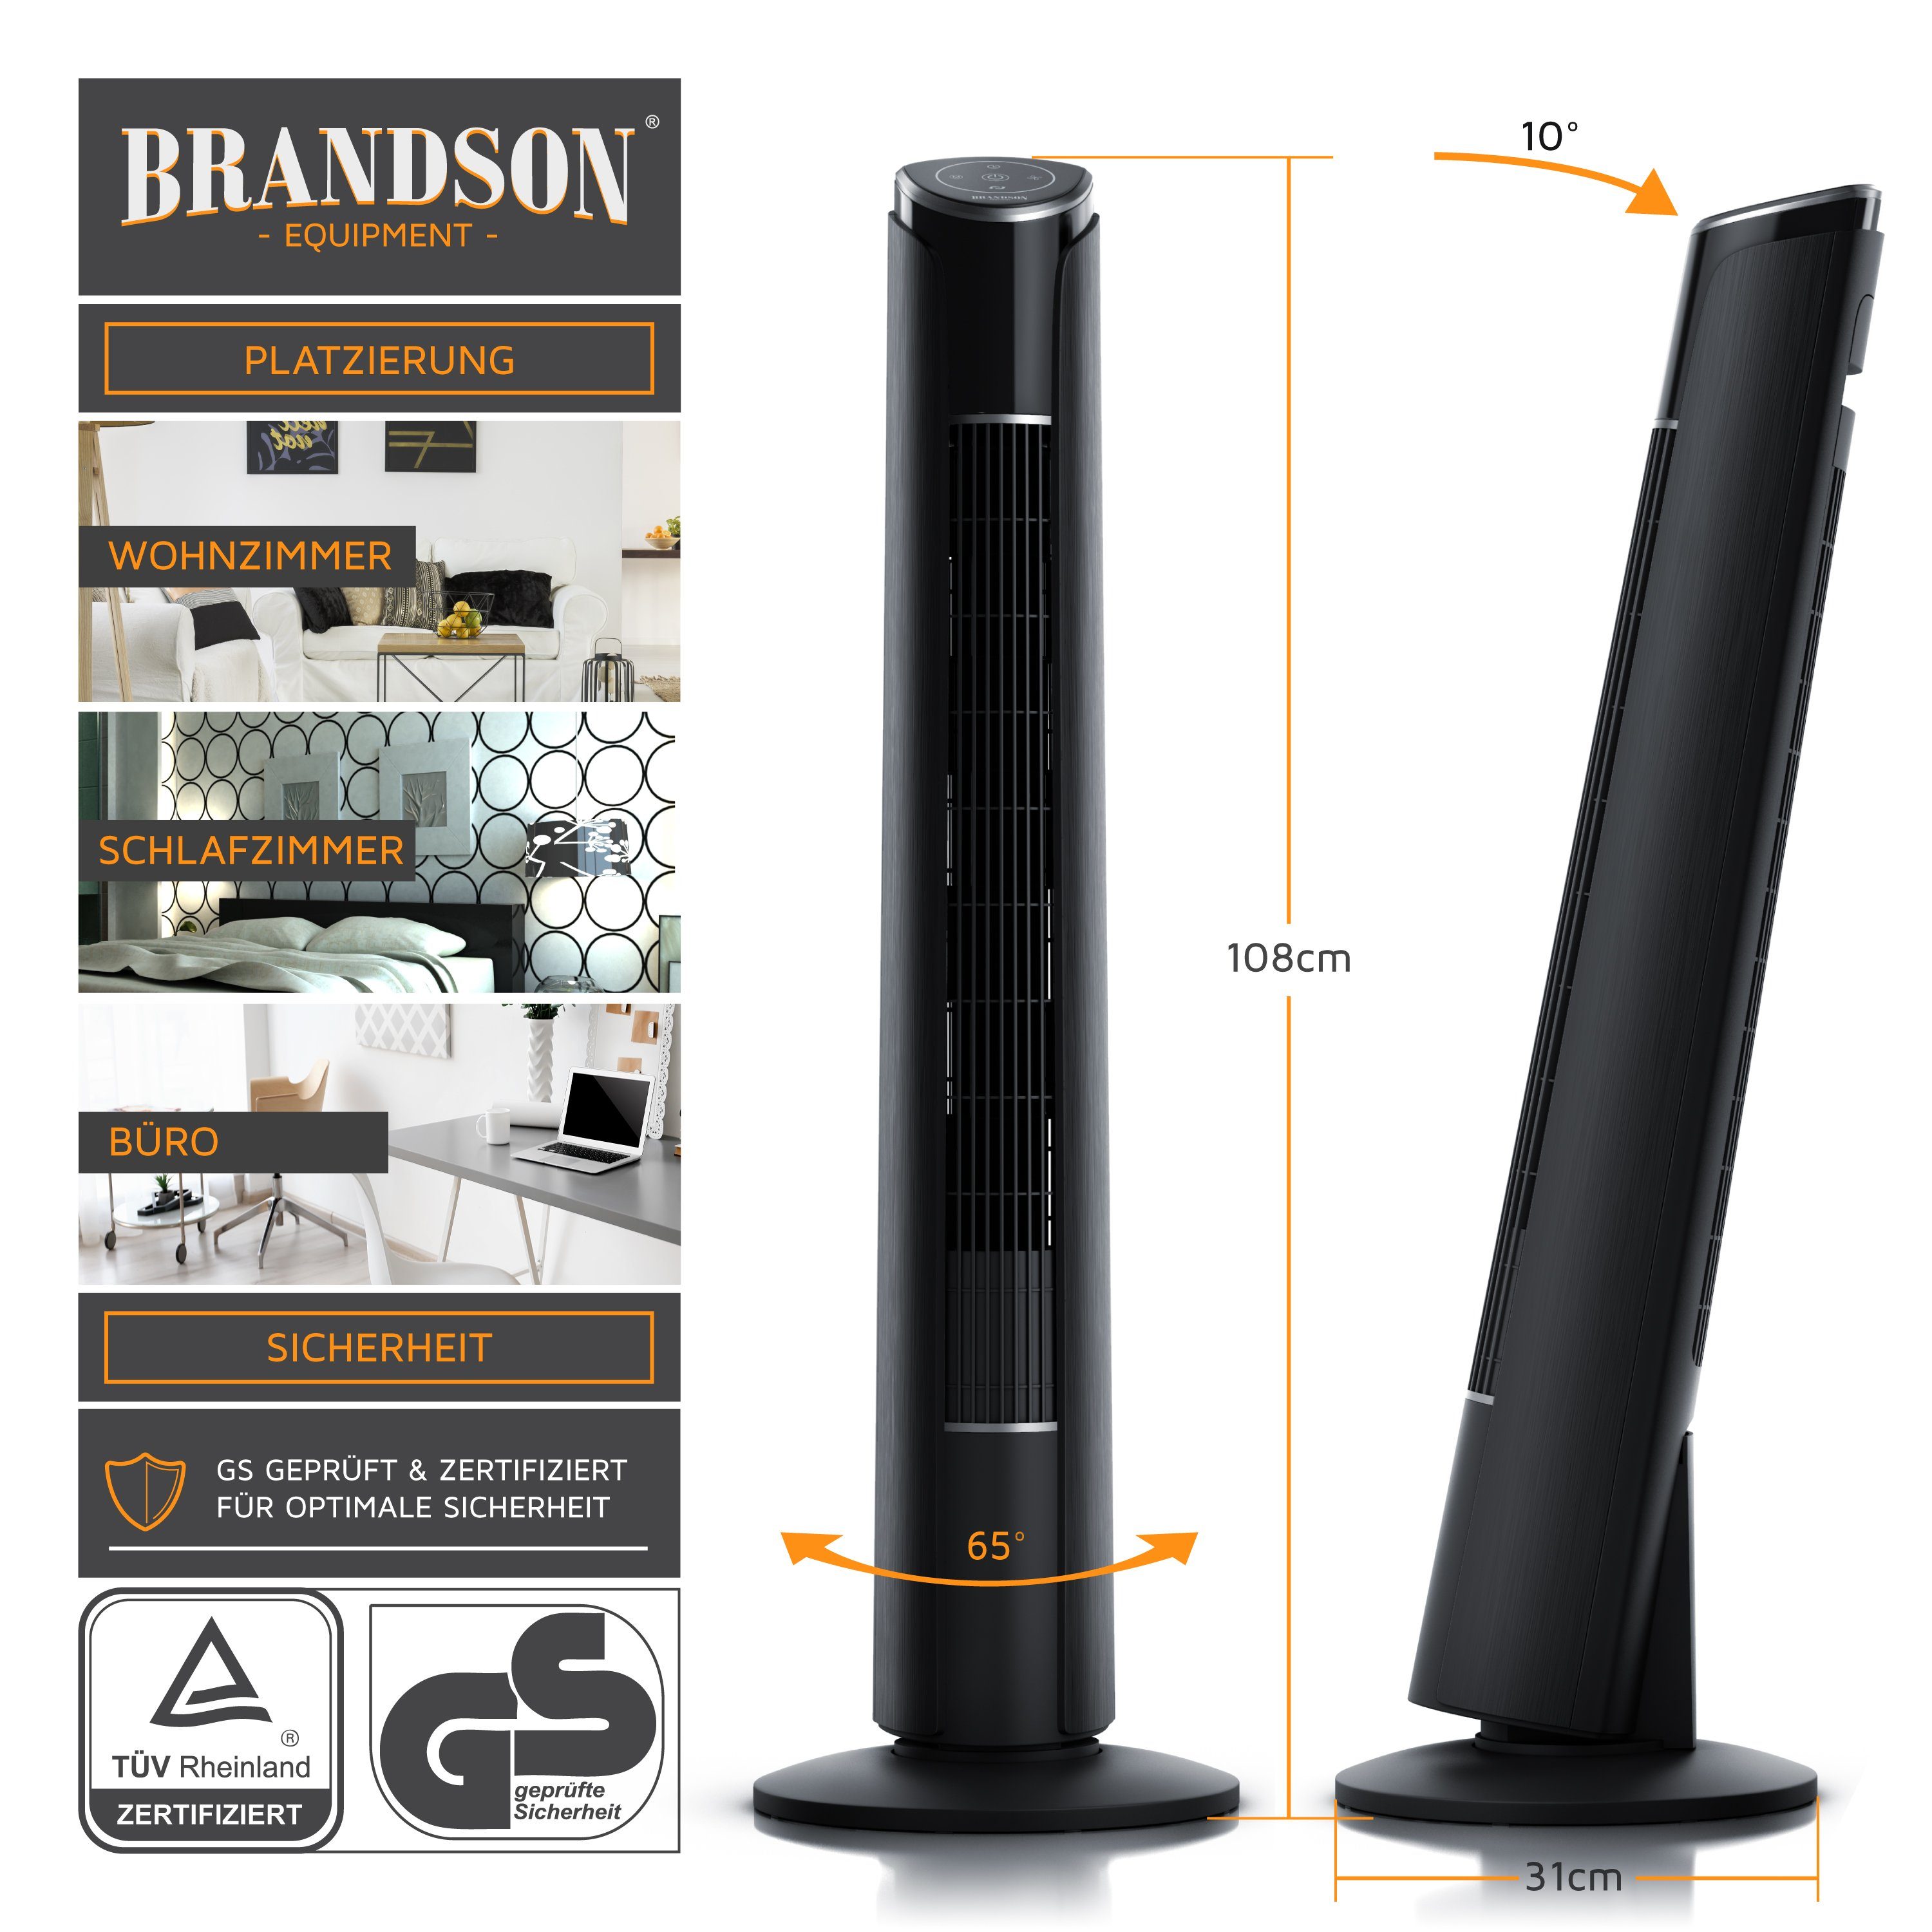 Brandson Turmventilator, Standventilator 108cm, neigbar, 4 Oszillation, Modi Fernbedienung, 10°